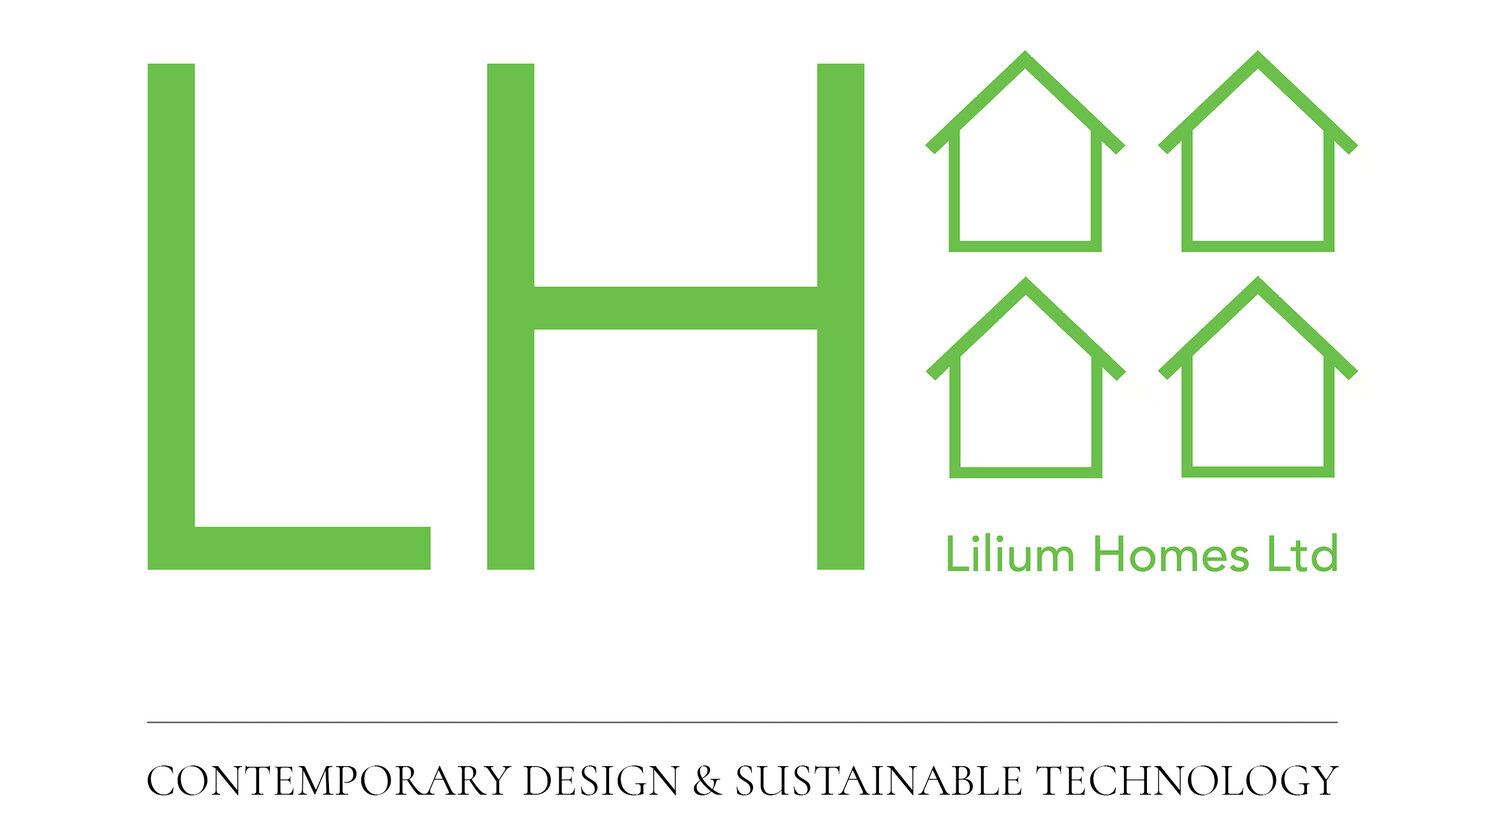 Lilium Homes Ltd